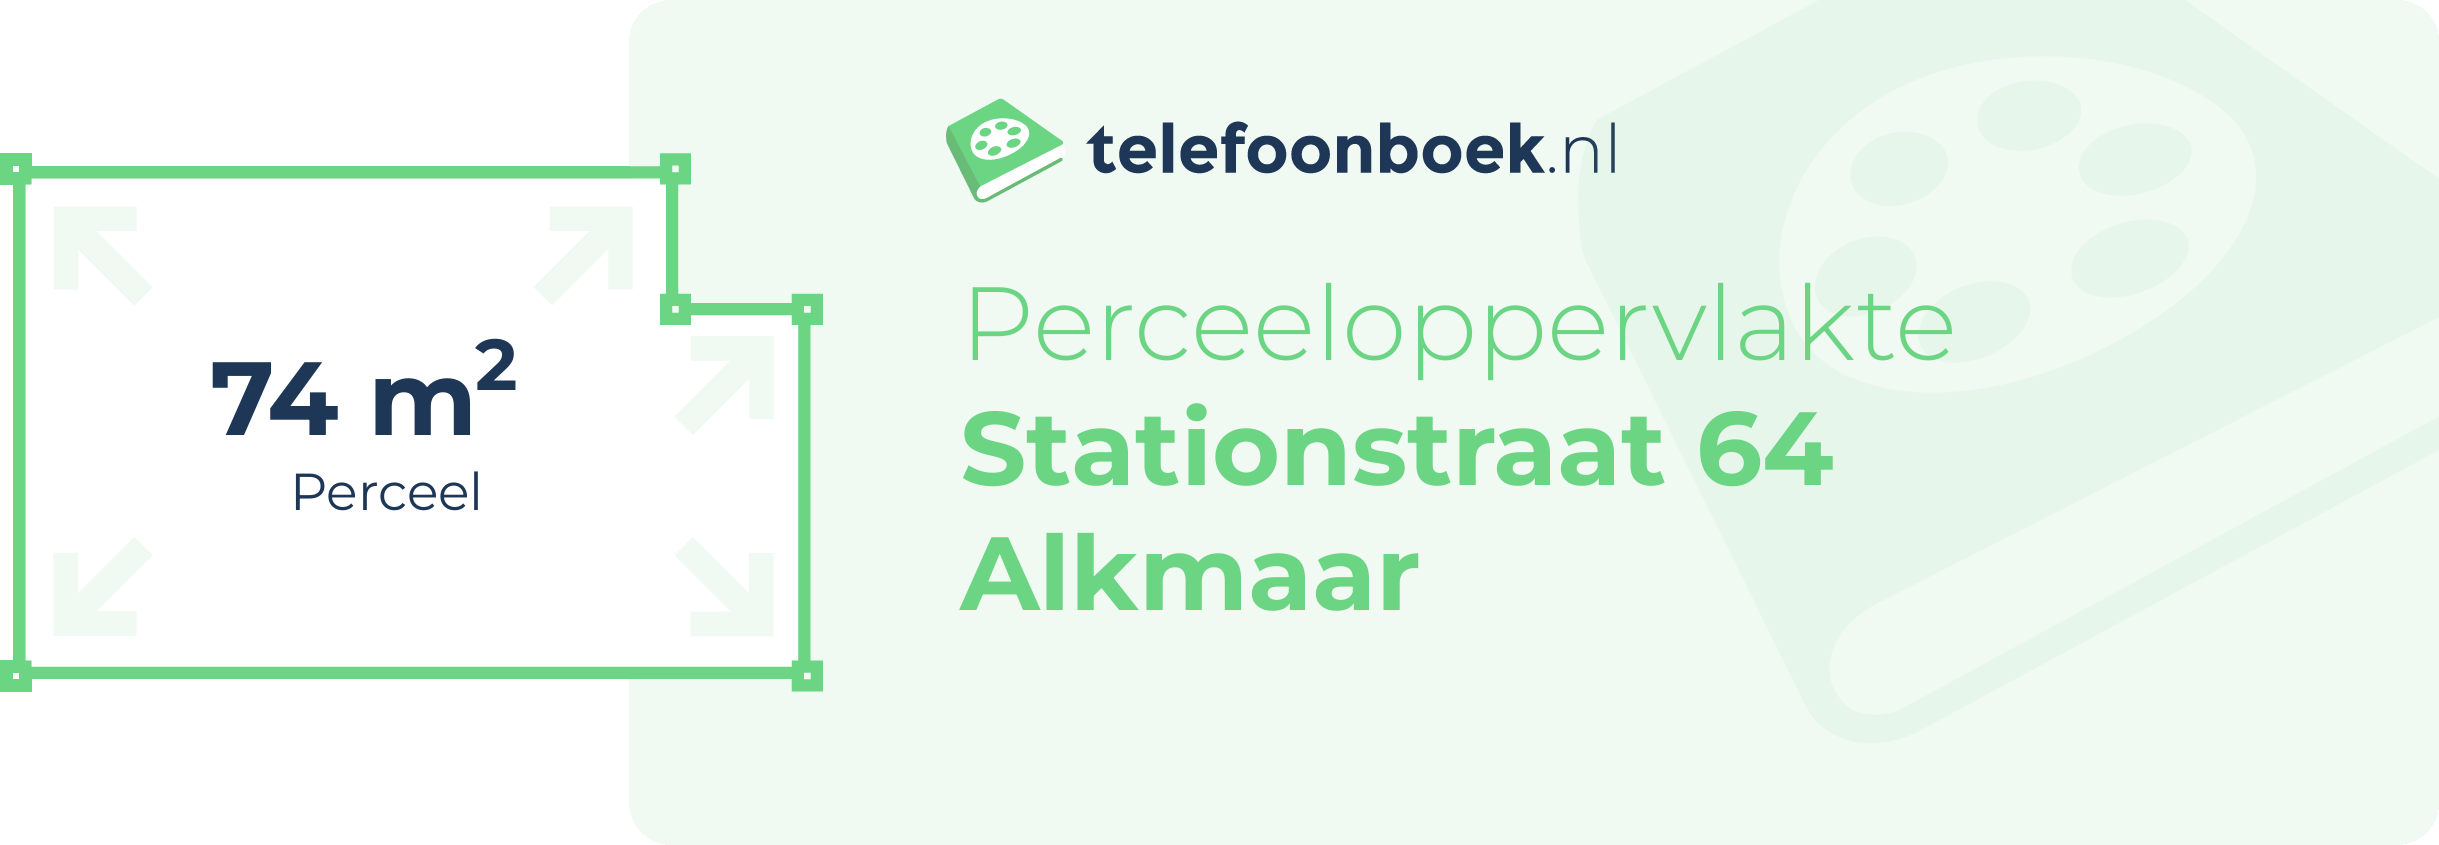 Perceeloppervlakte Stationstraat 64 Alkmaar